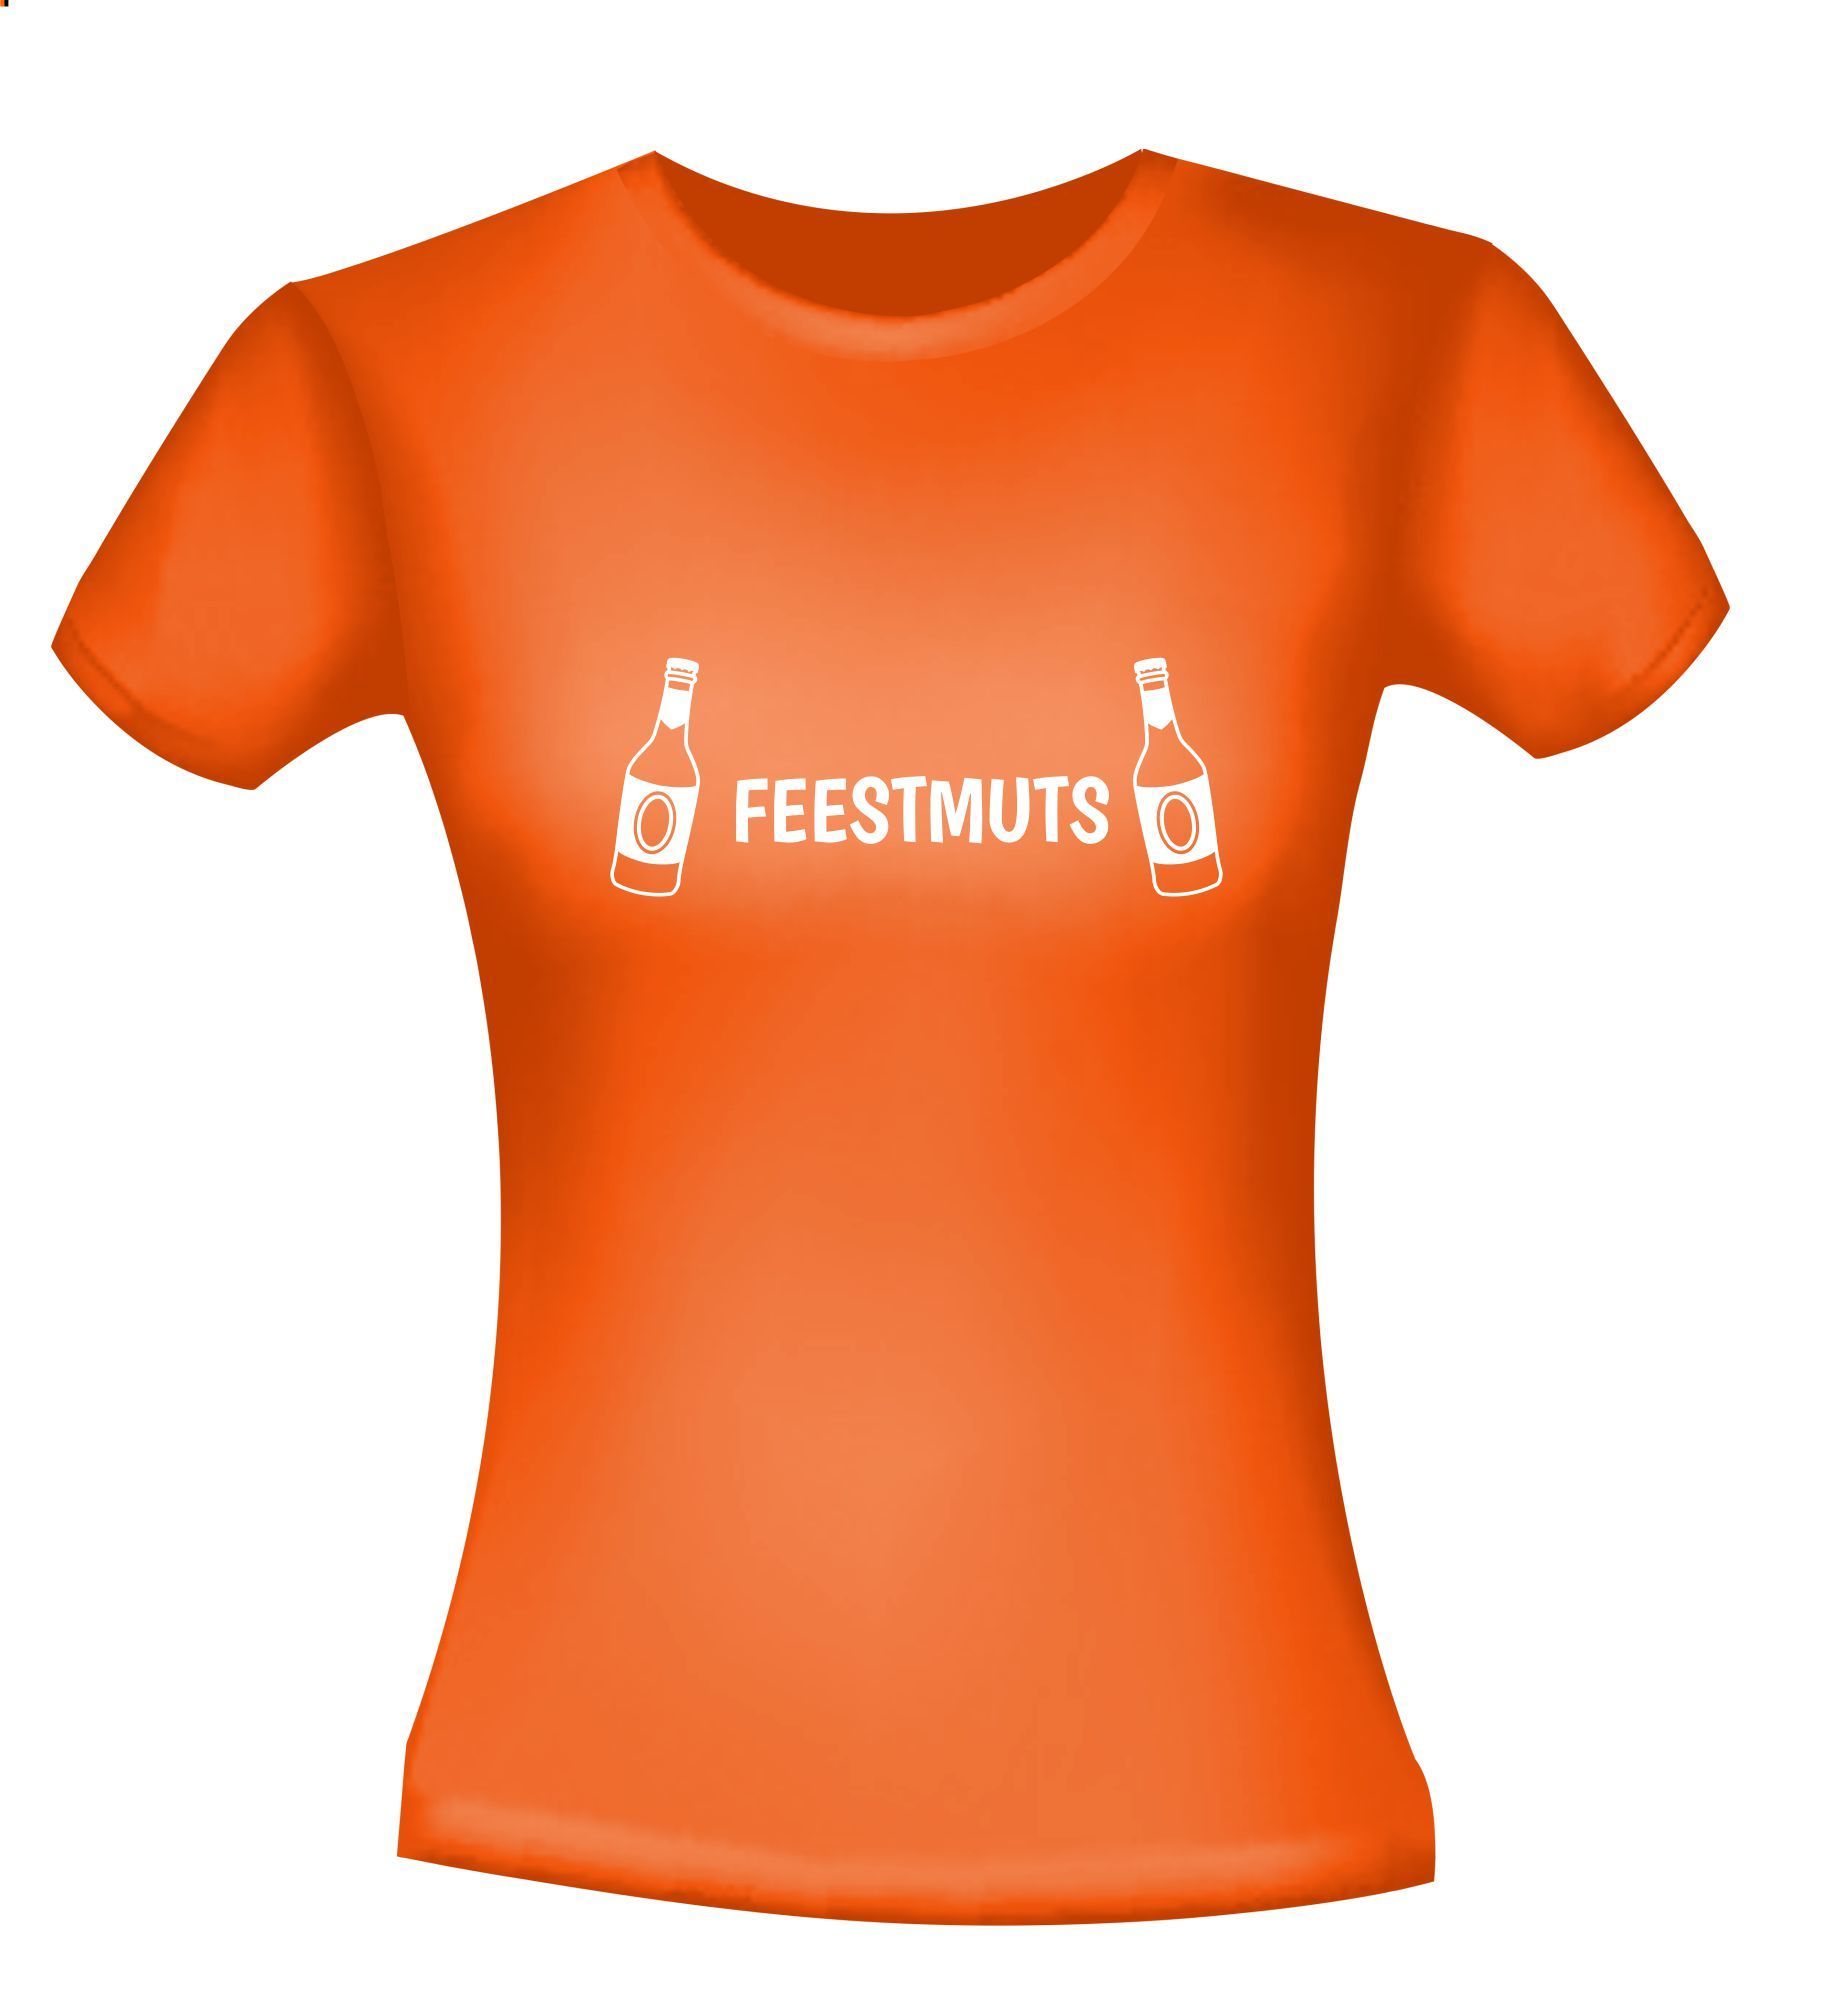 Feestmuts T-shirt oranje dames EK WK voetbal bier feesten festivals party voetbal